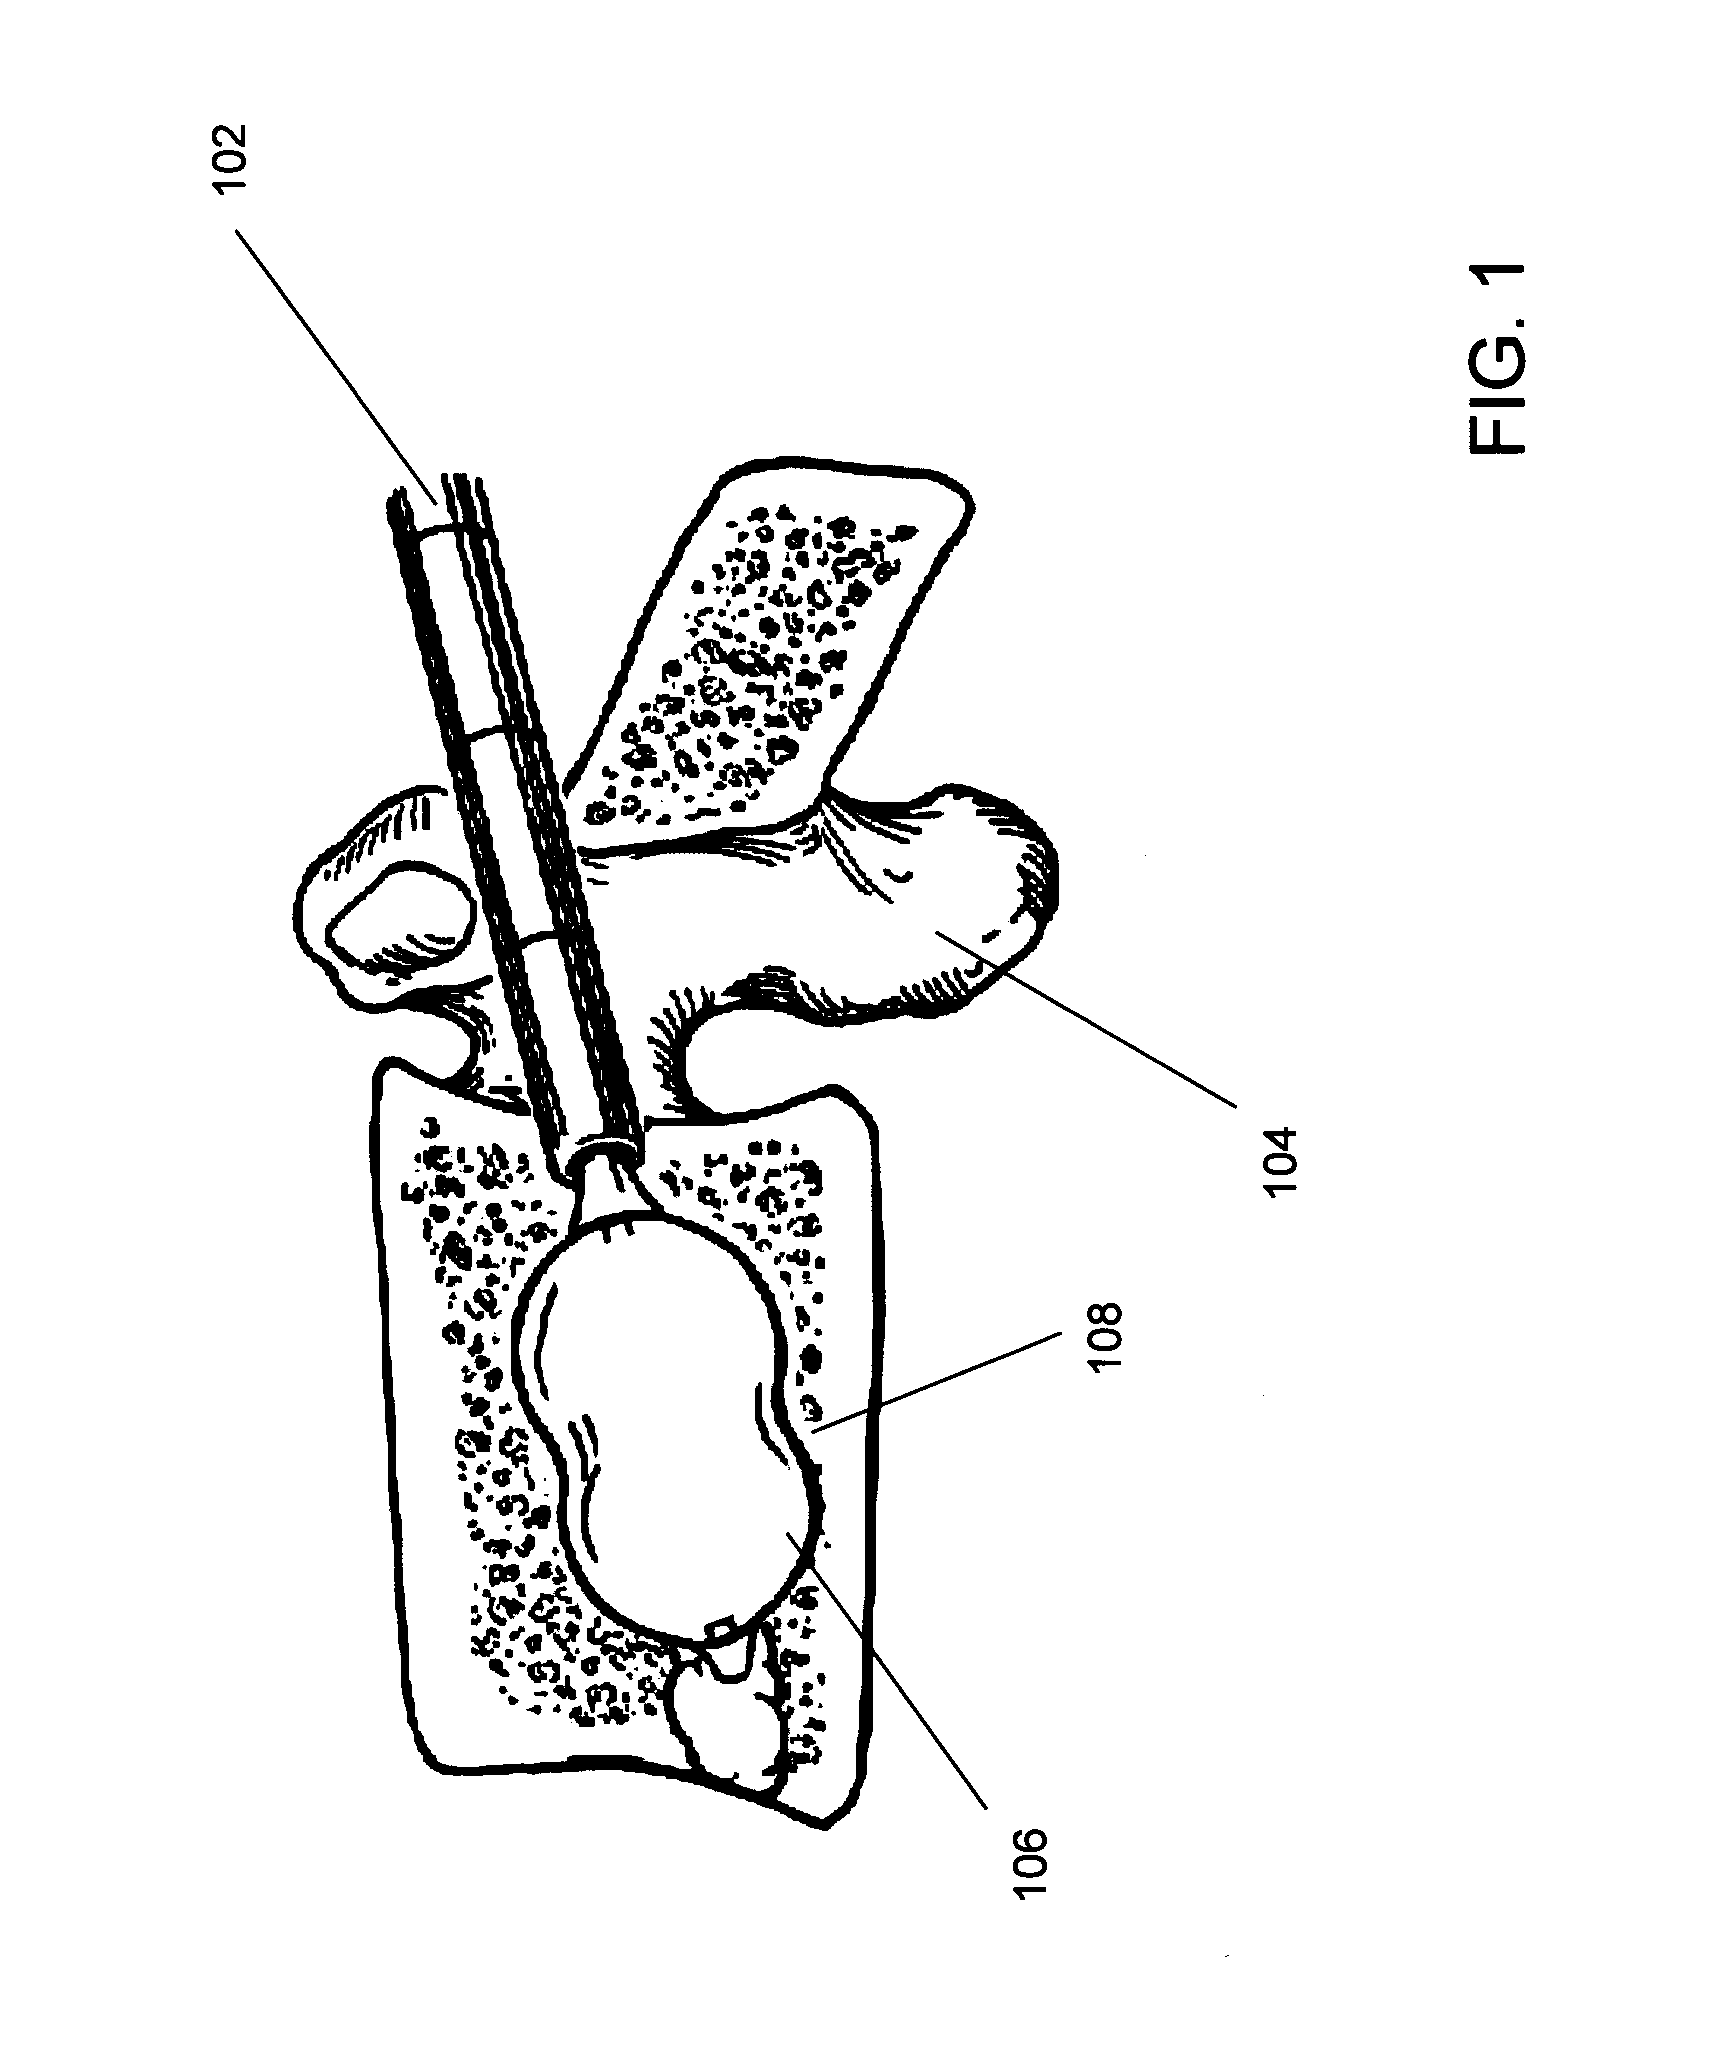 Biologic balloon and method of use